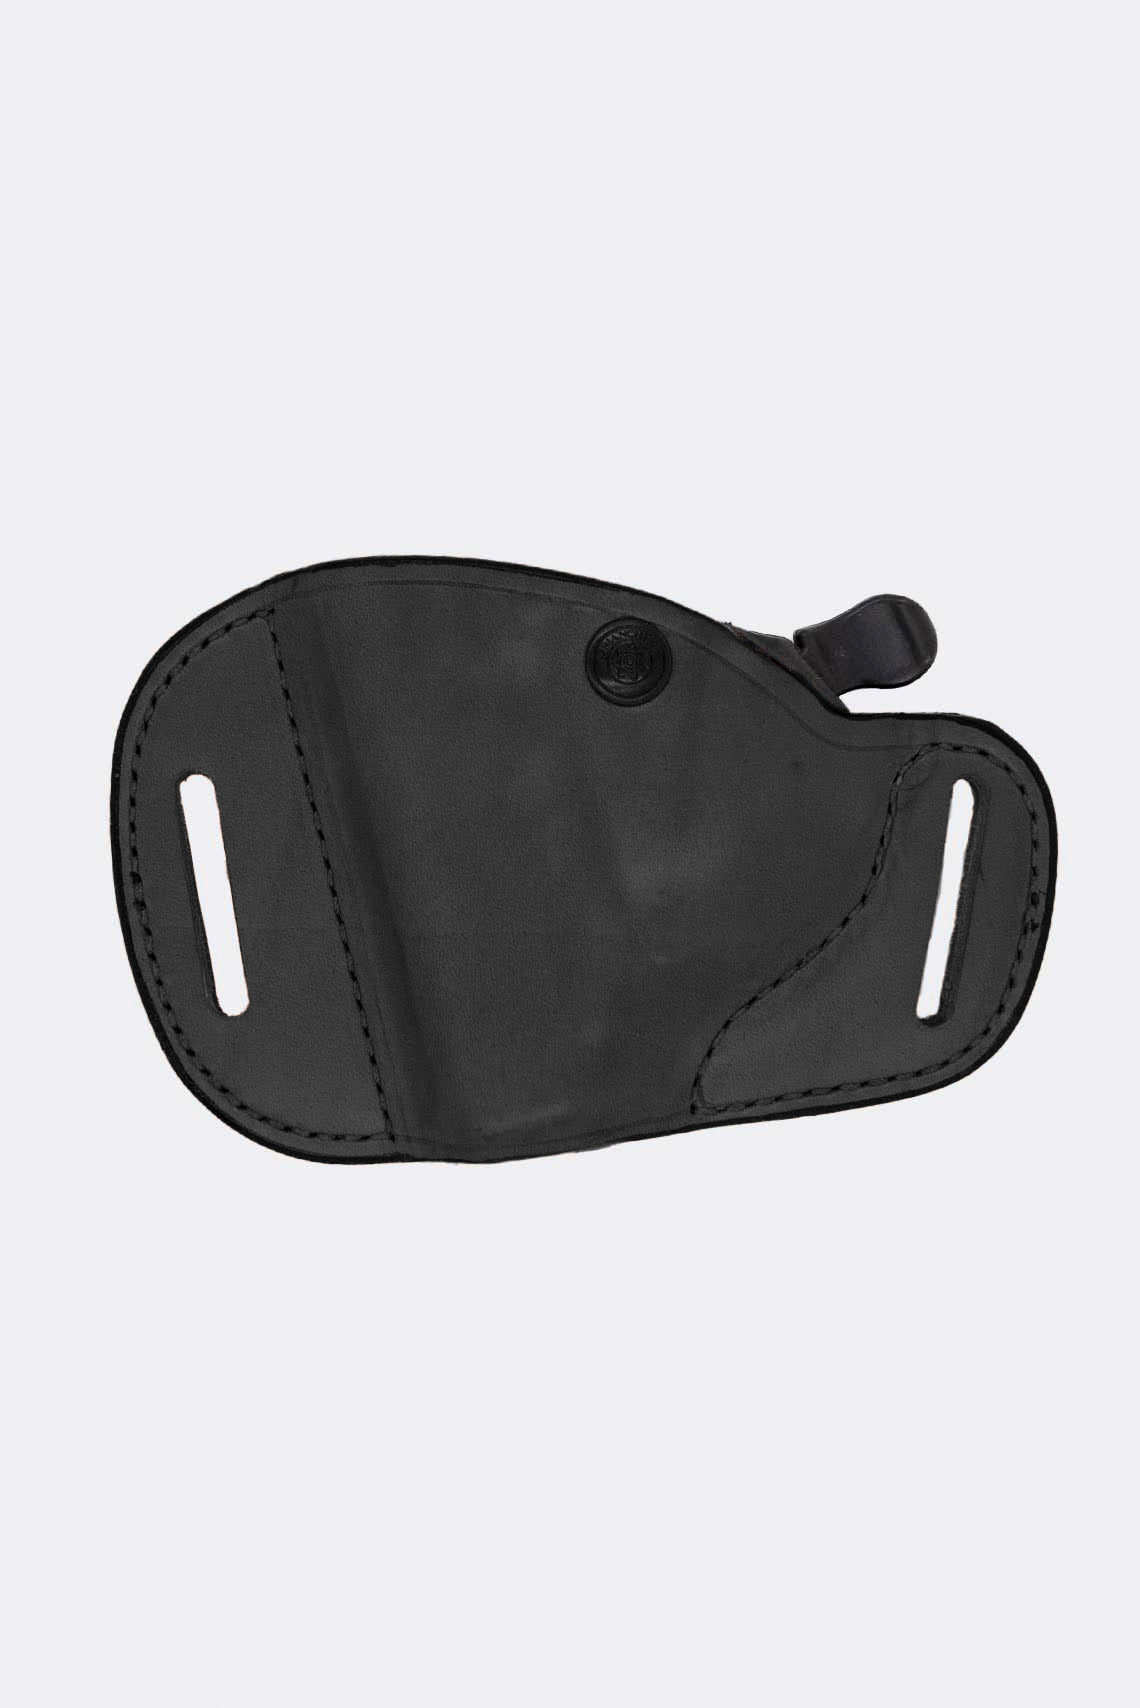 CarryLok™ Auto Retention™ Belt Slide Holster | Bianchi Leather